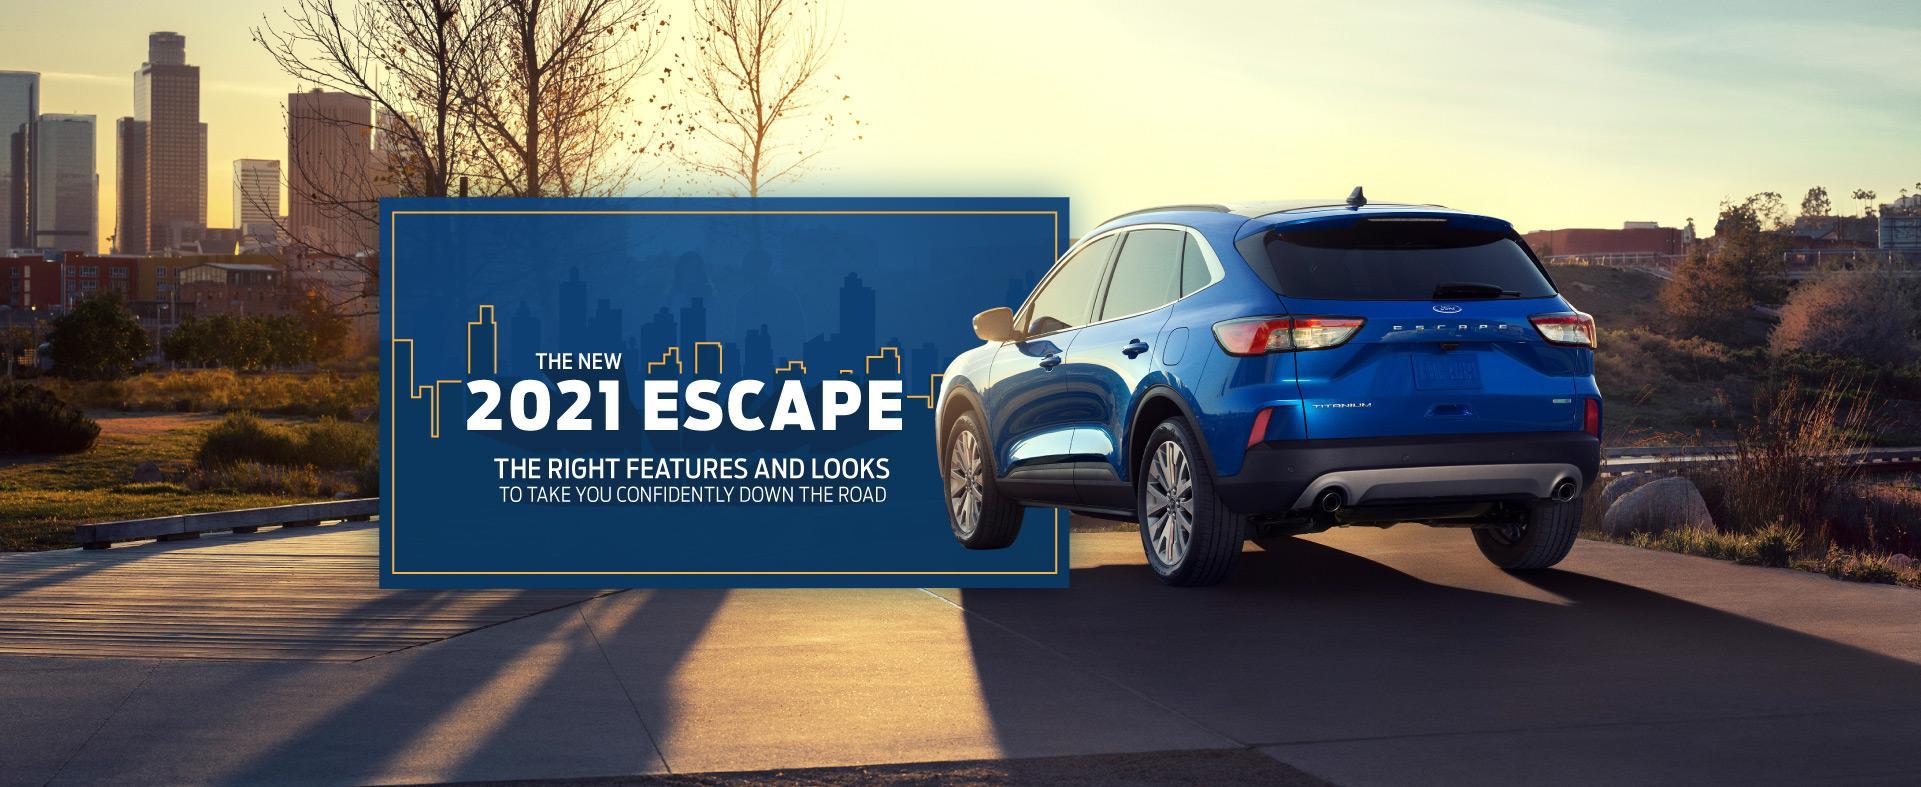 ford escape 2021 lease